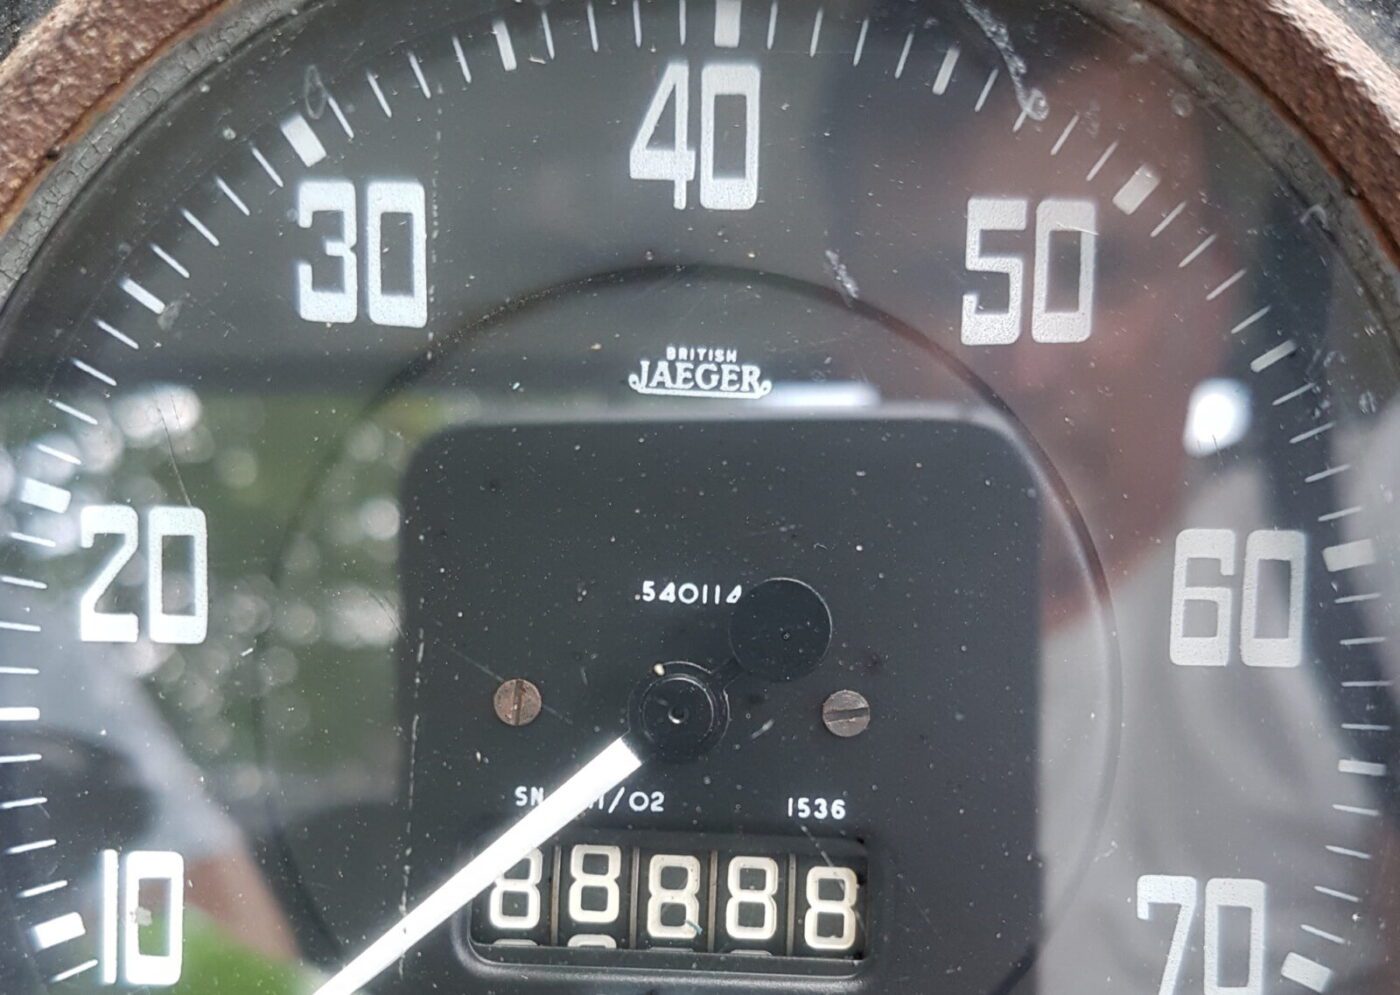 88888 speedo